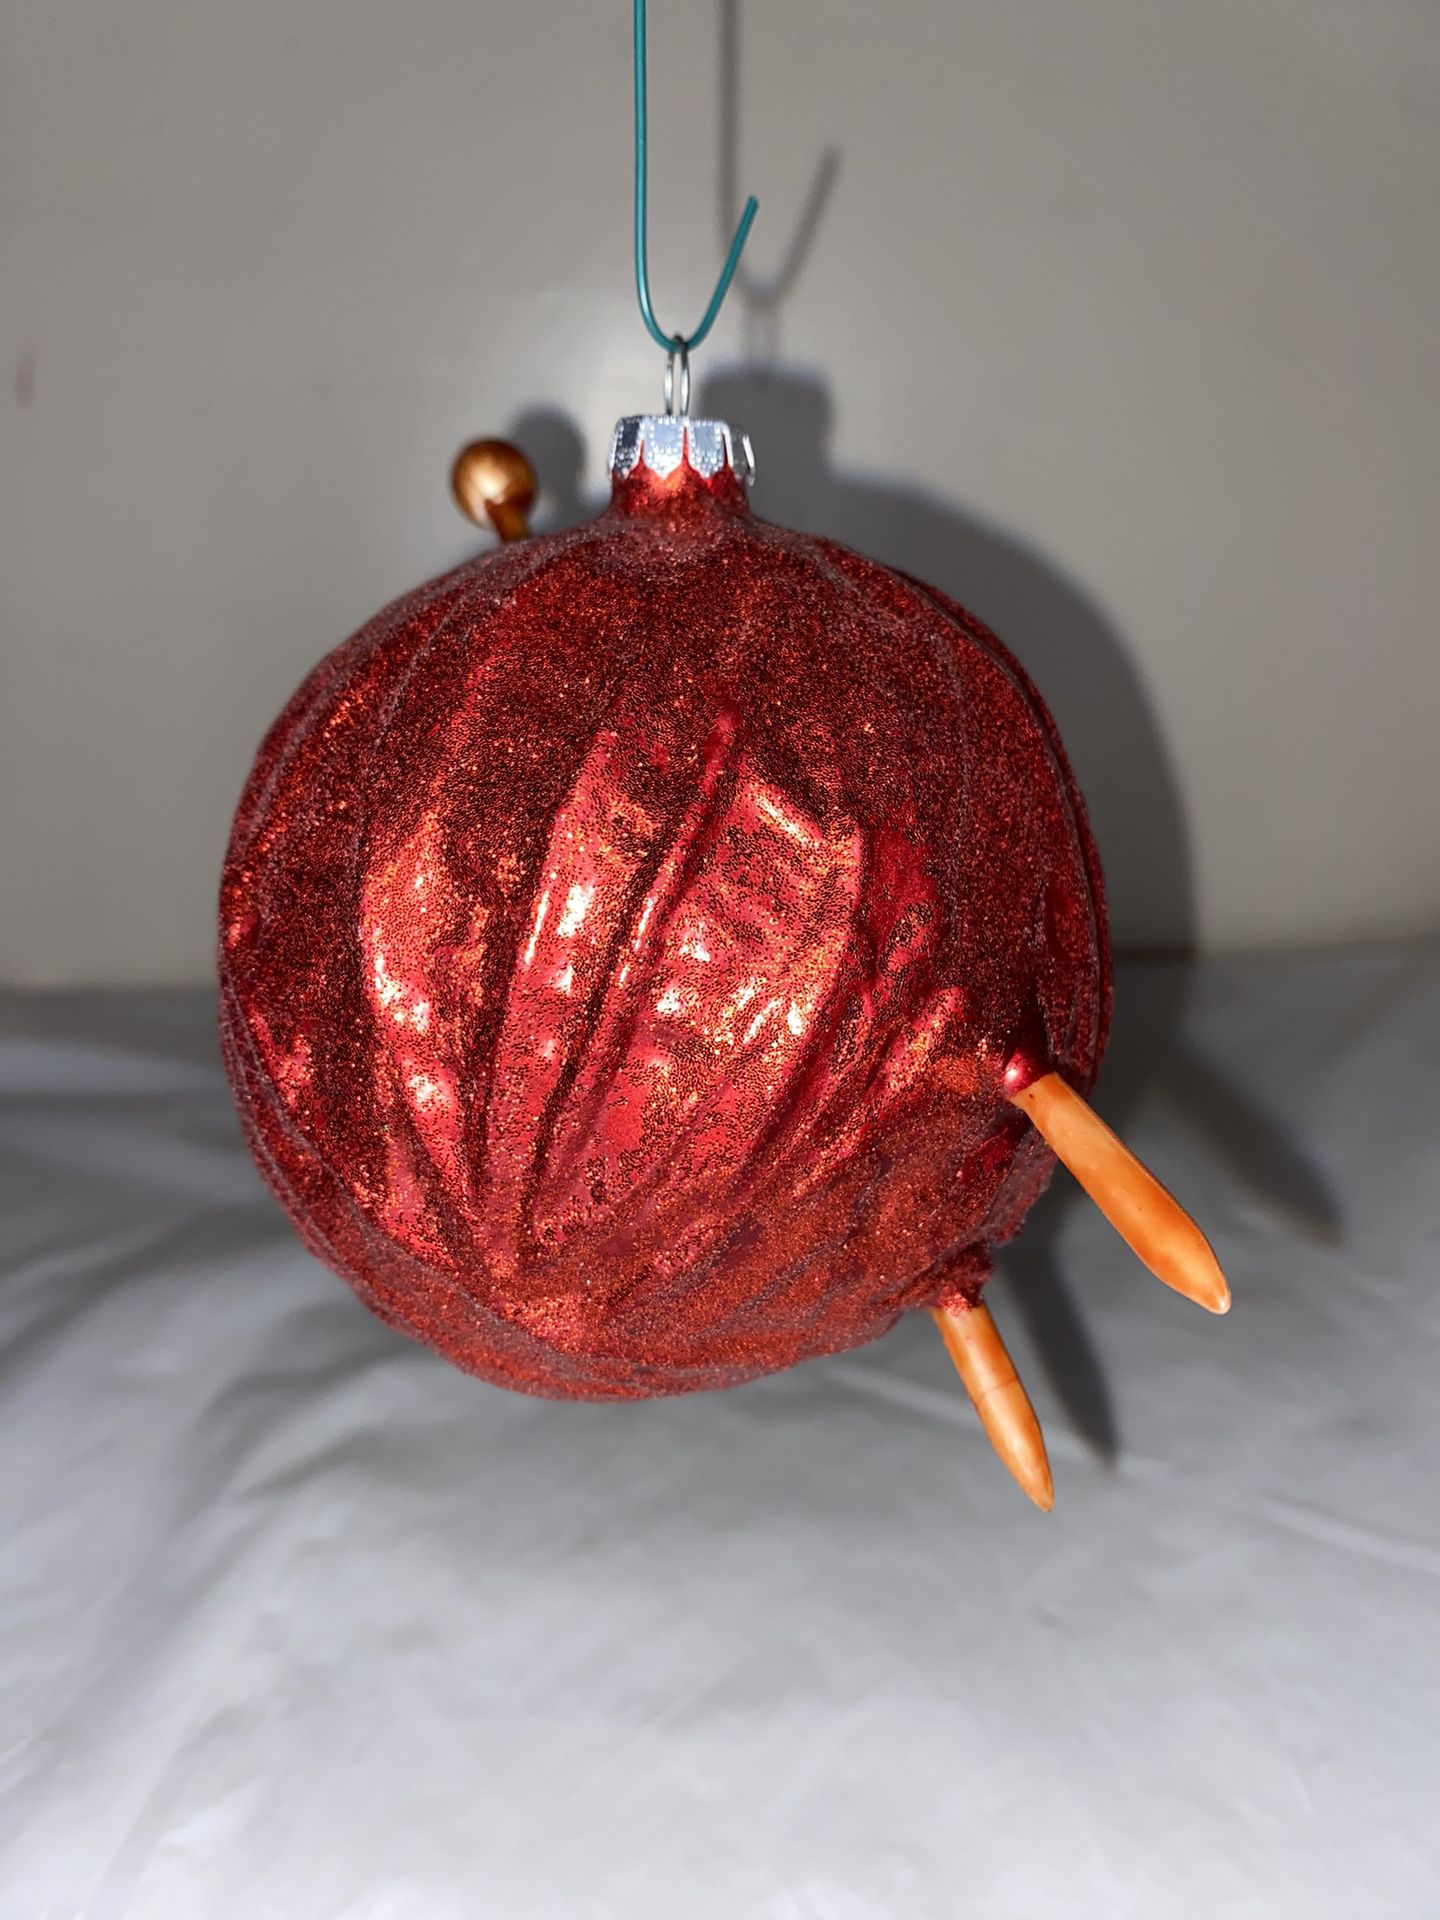 Ball of Yarn Knitter's Christmas Ornament Ball Red Glitter